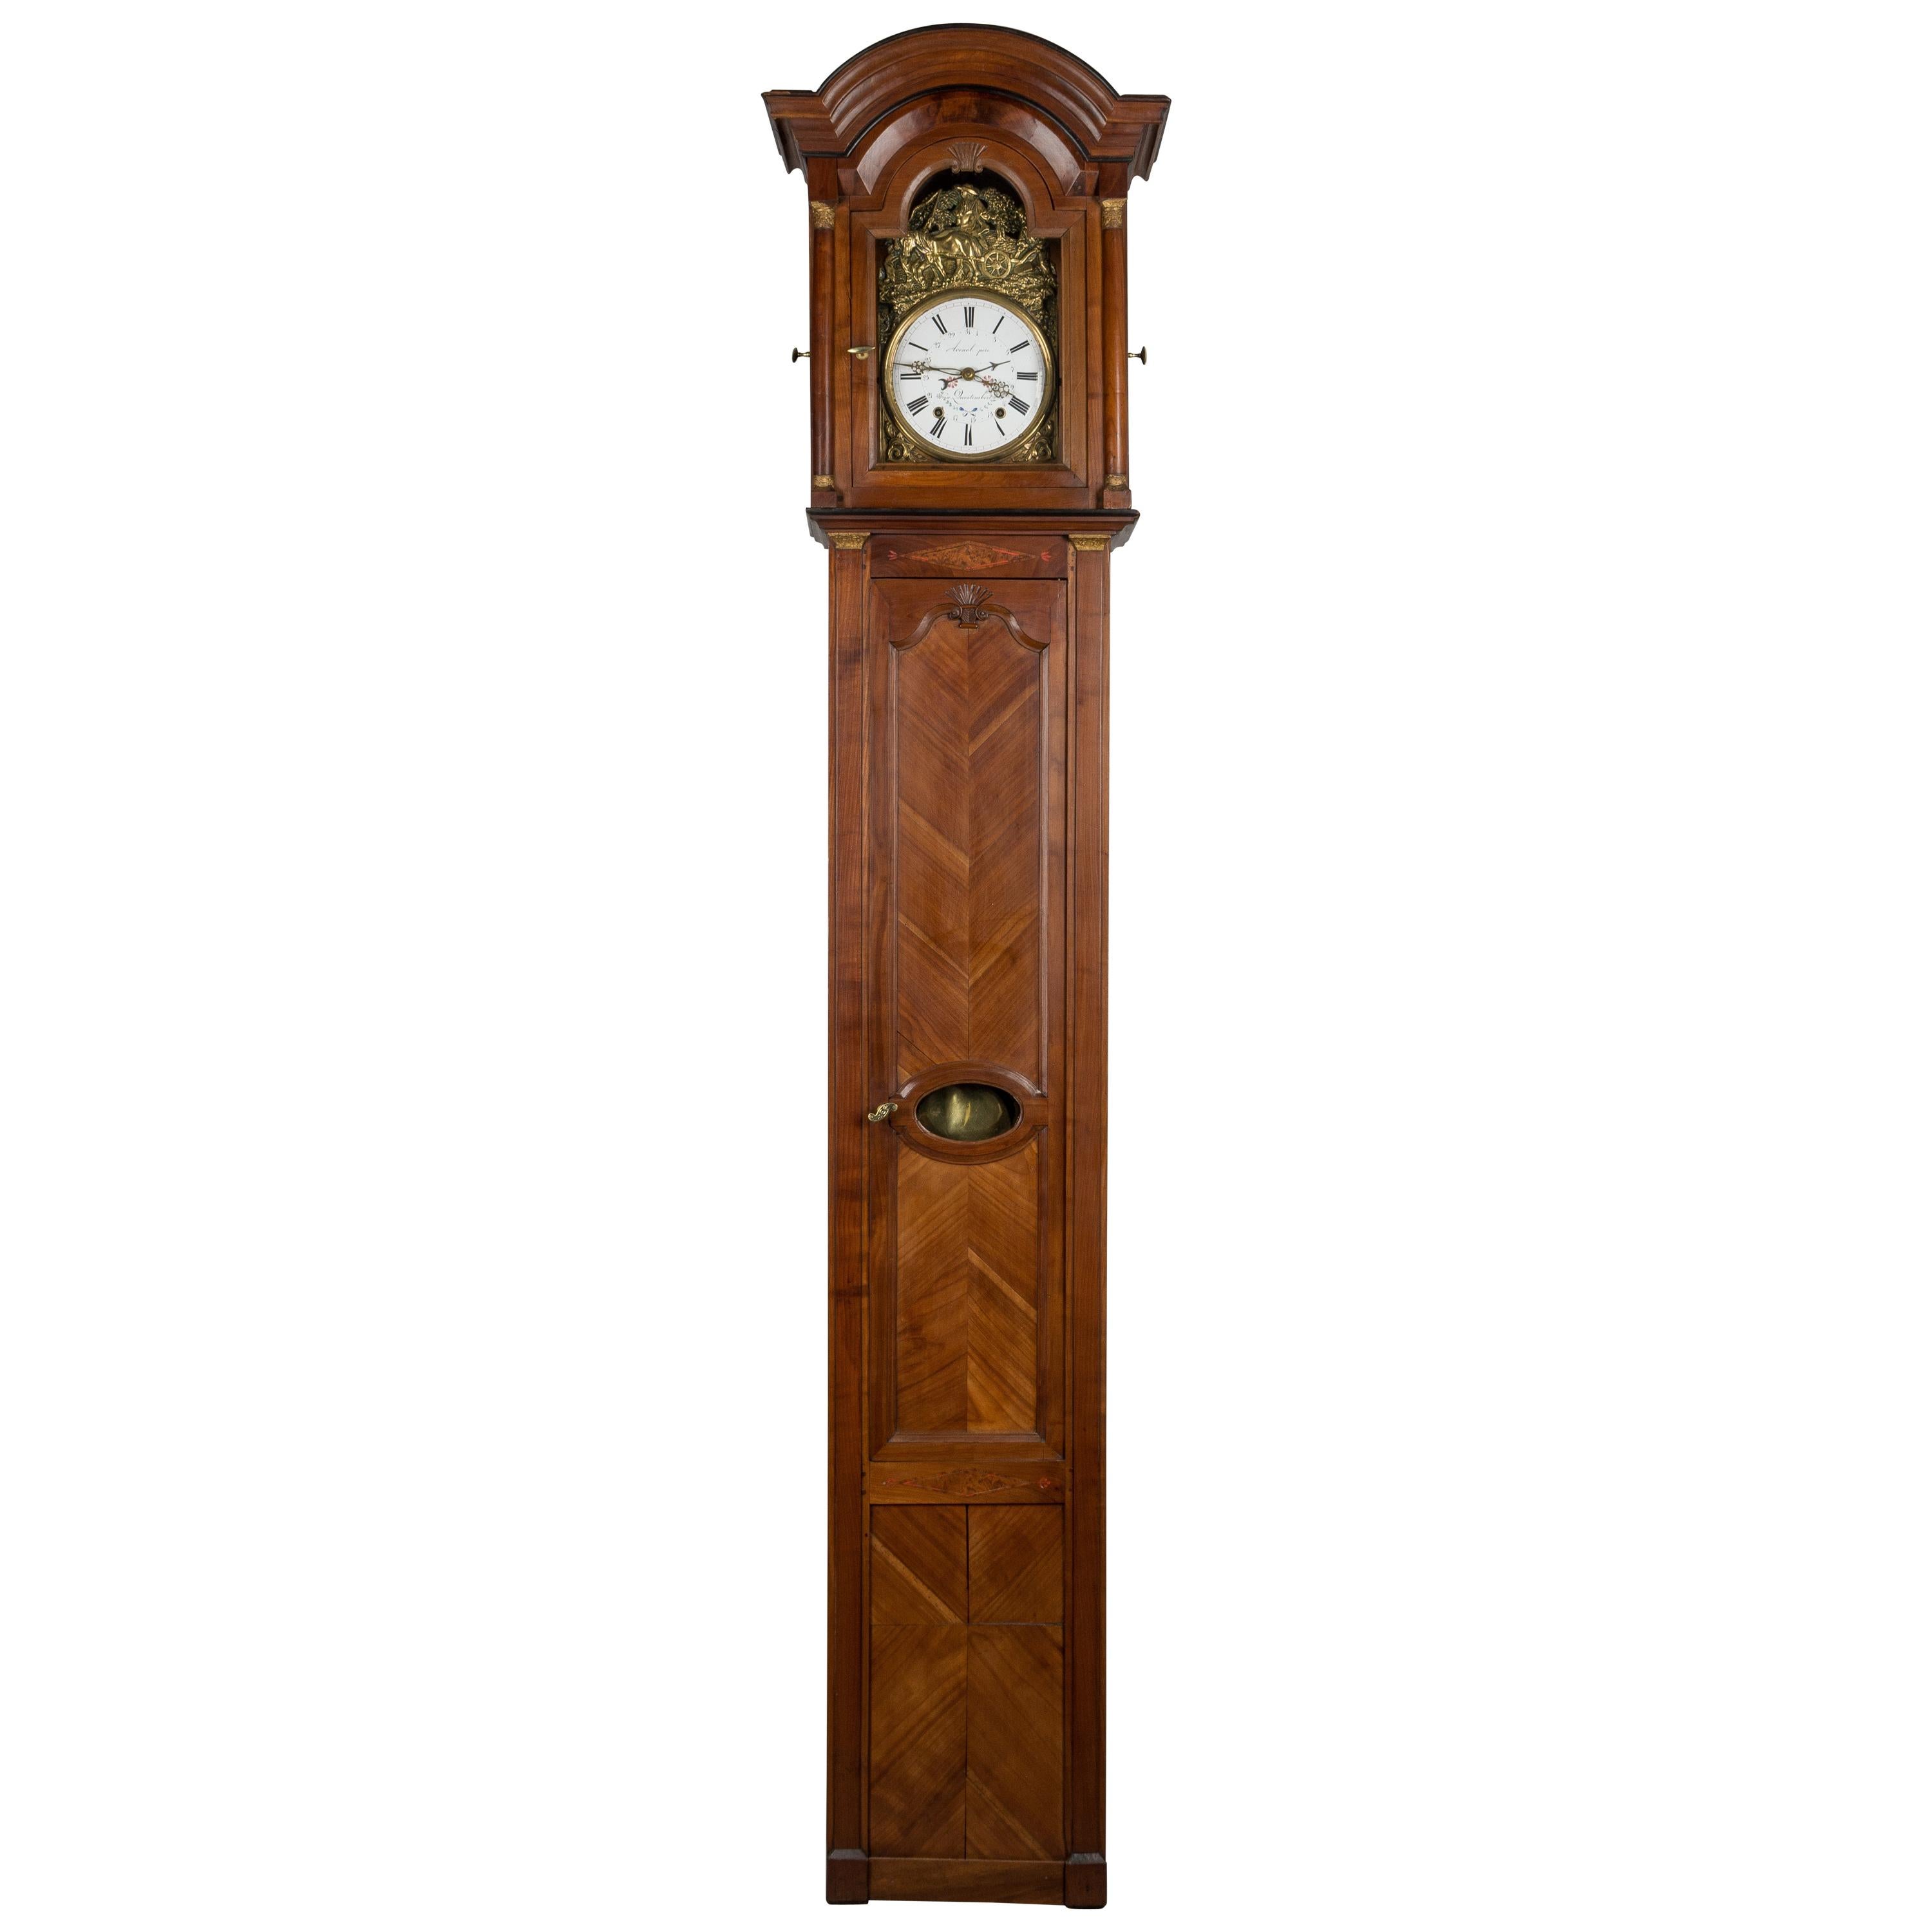 French Horloge de Parquet or Tall Case Clock